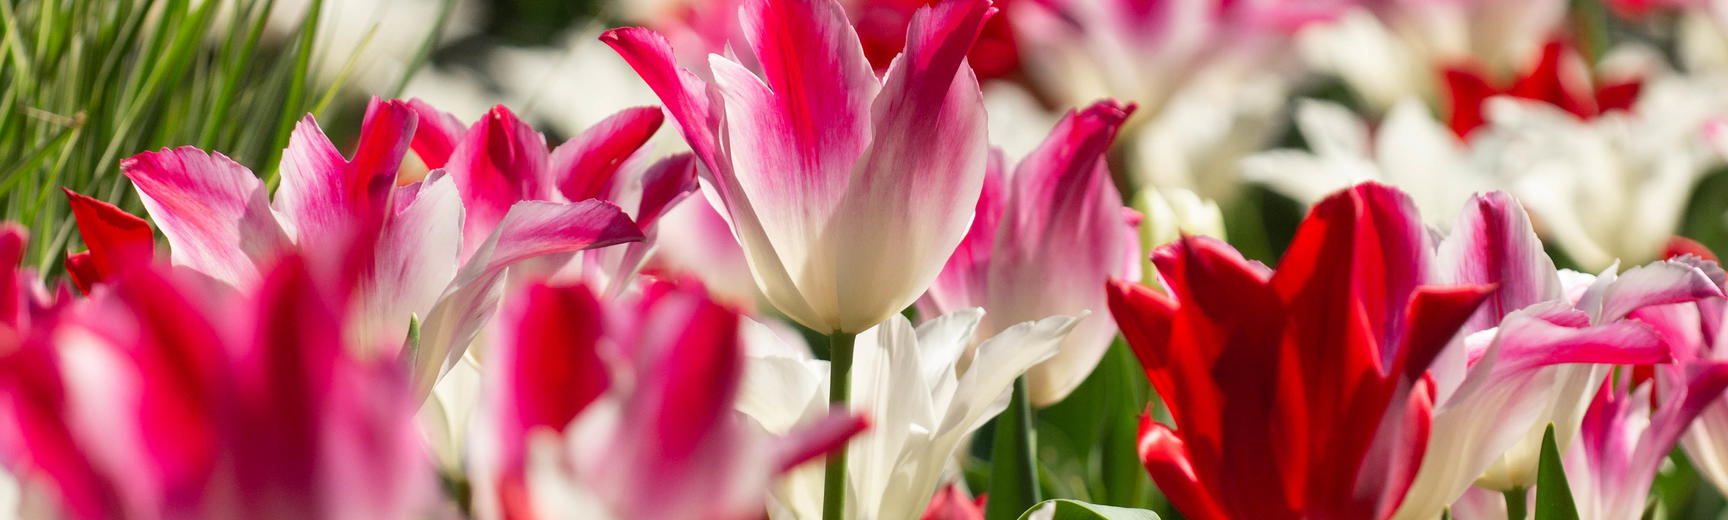 Oxford Botanic Garden - Tulips